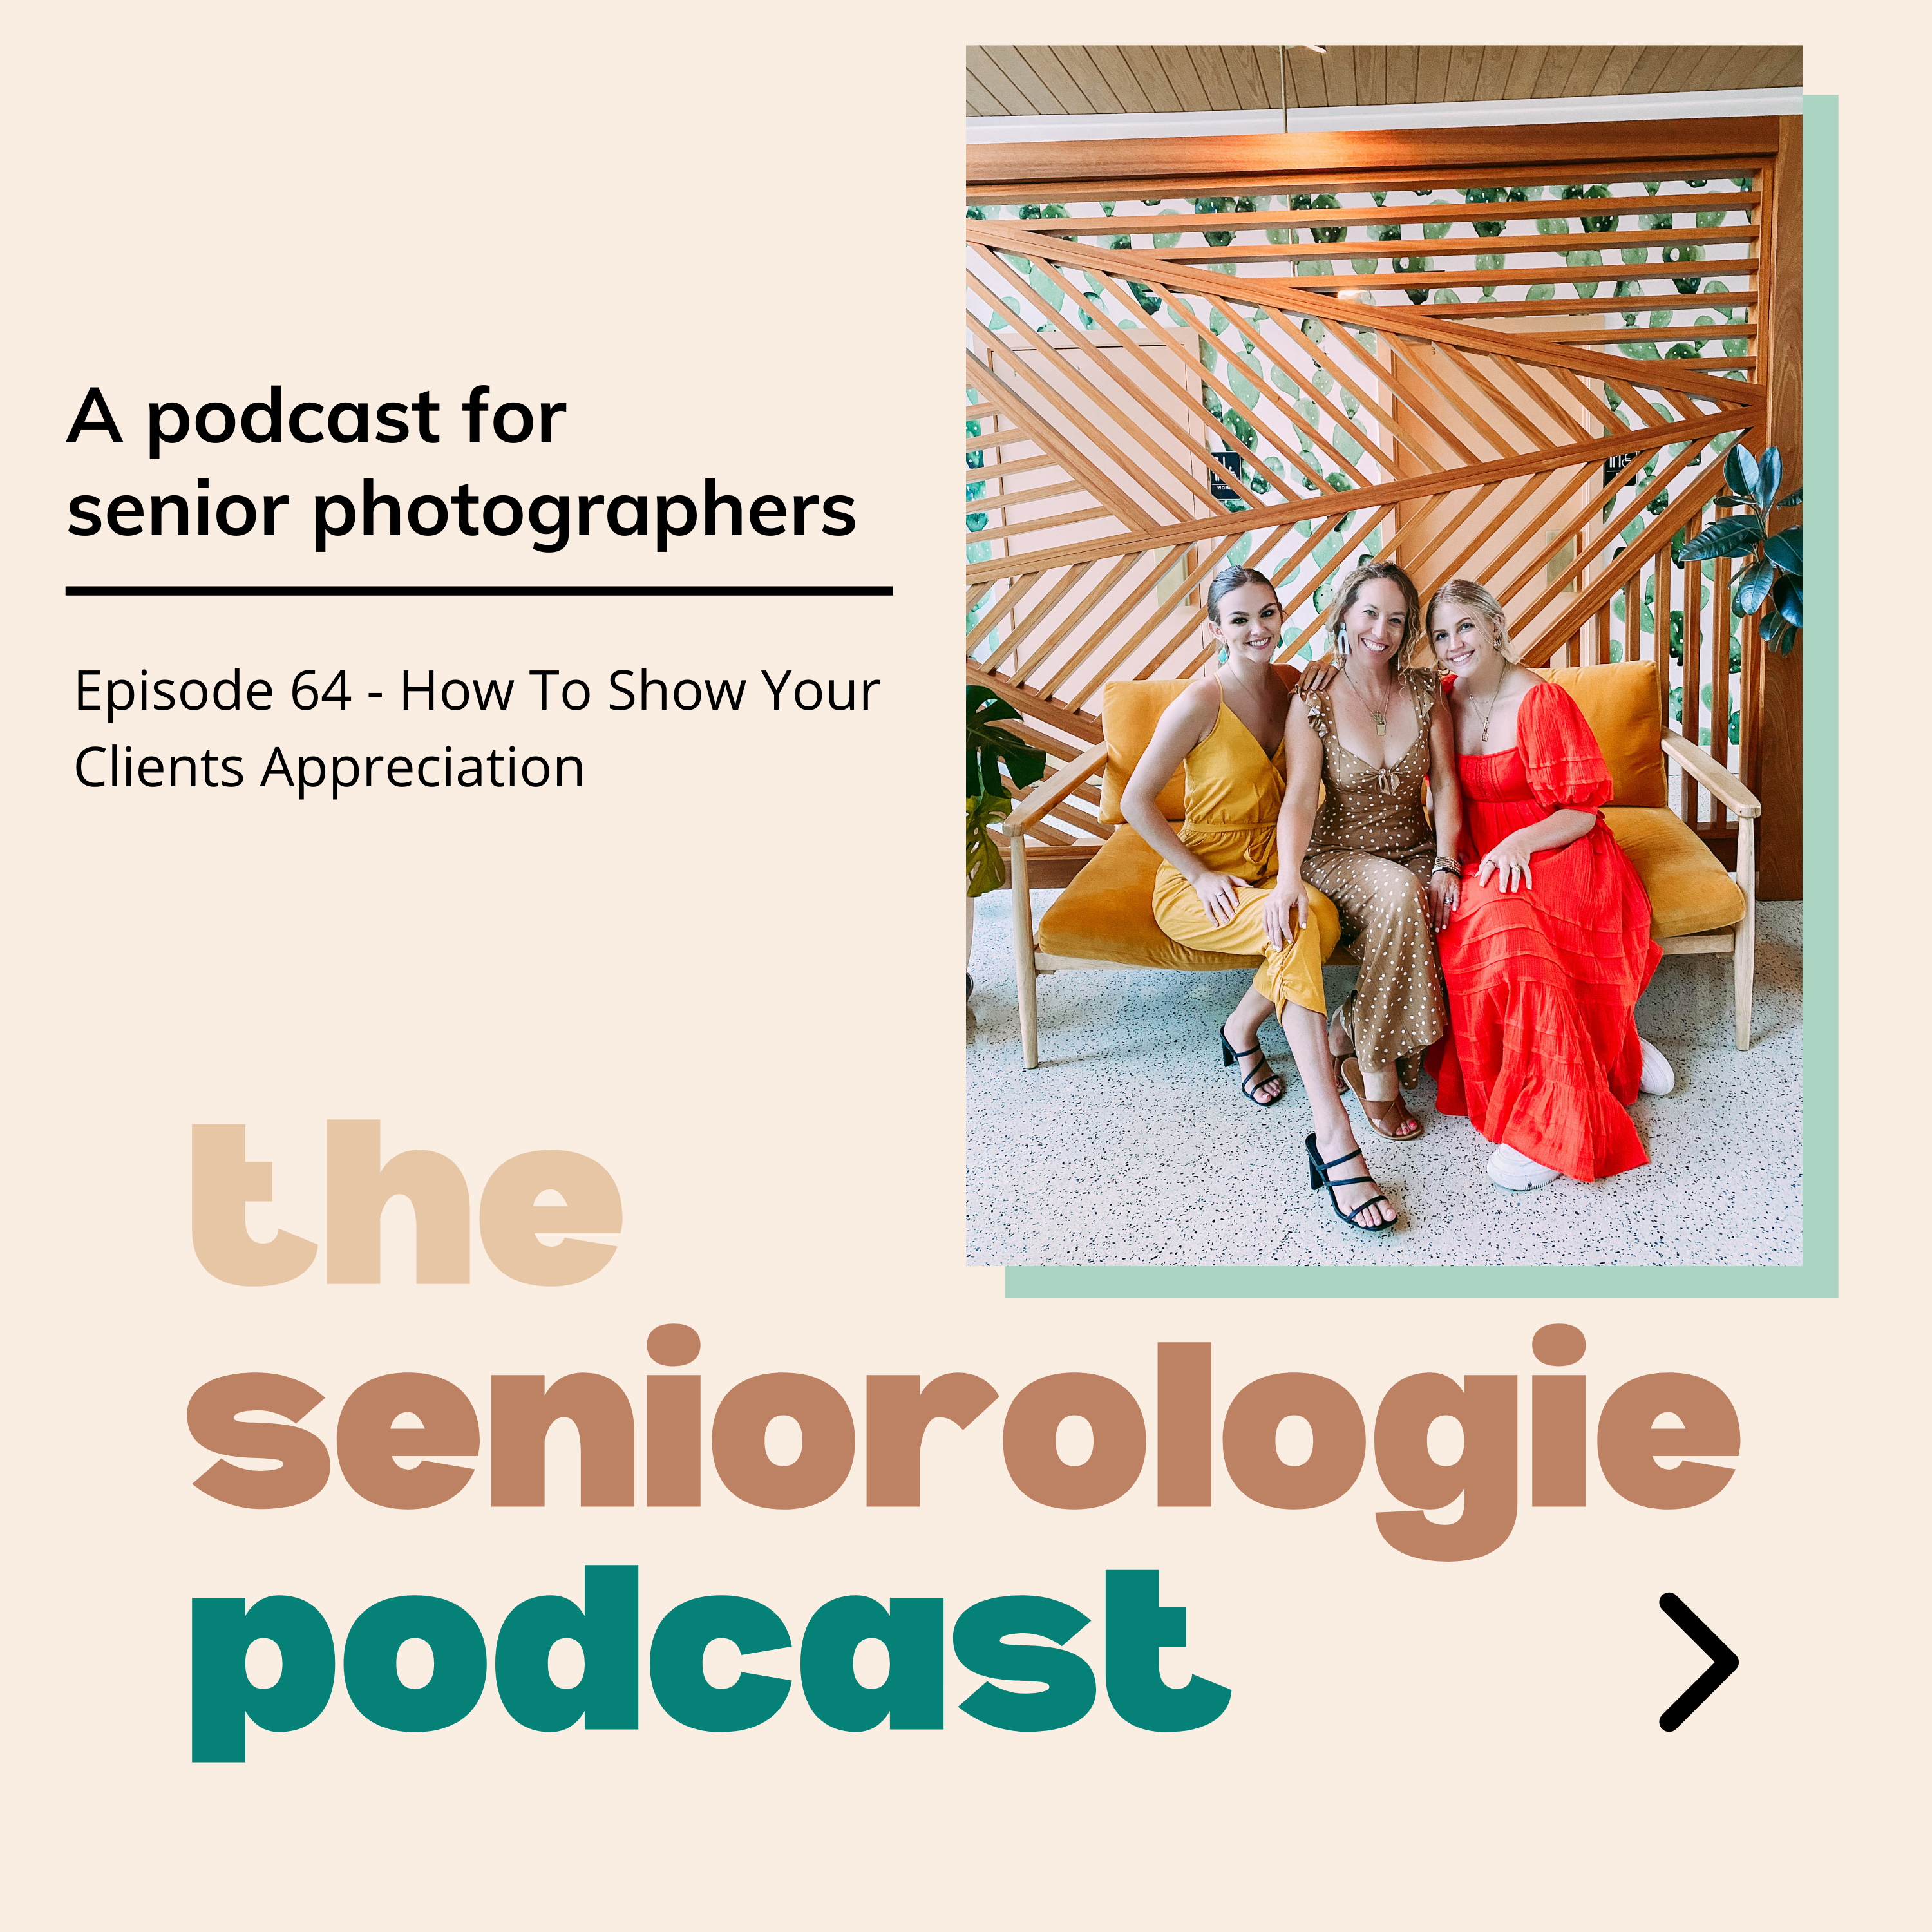 seniorologie podcast episode show appreciation for clients